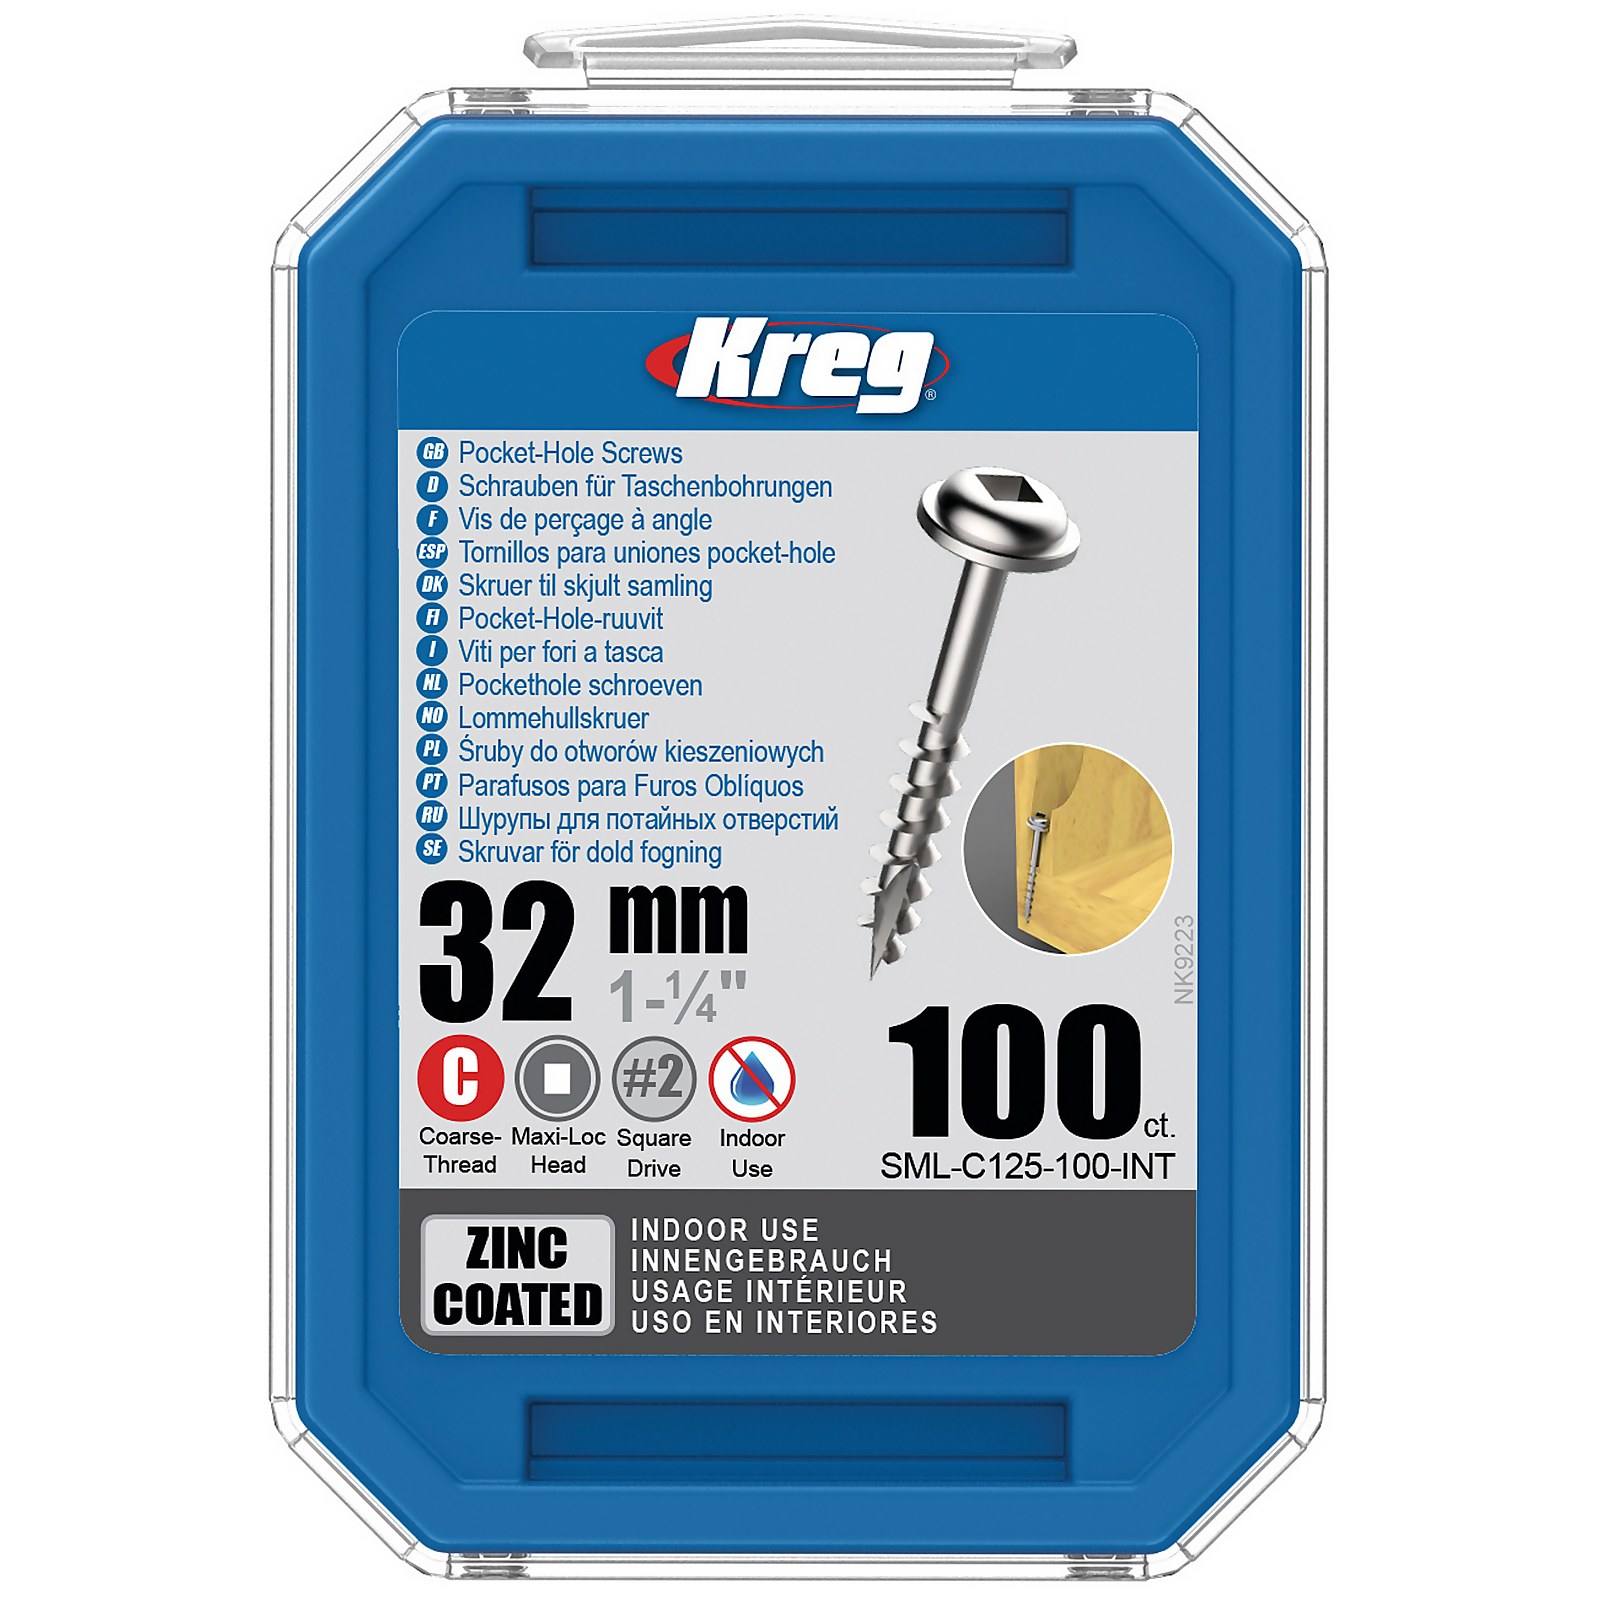 Photo of Kreg Sml-c125-100-eur Hd Protec-kote Pocket-hole Screws - 64mm / 2.50 - #14 Coarse-thread- Maxi-loc - 100 Pack